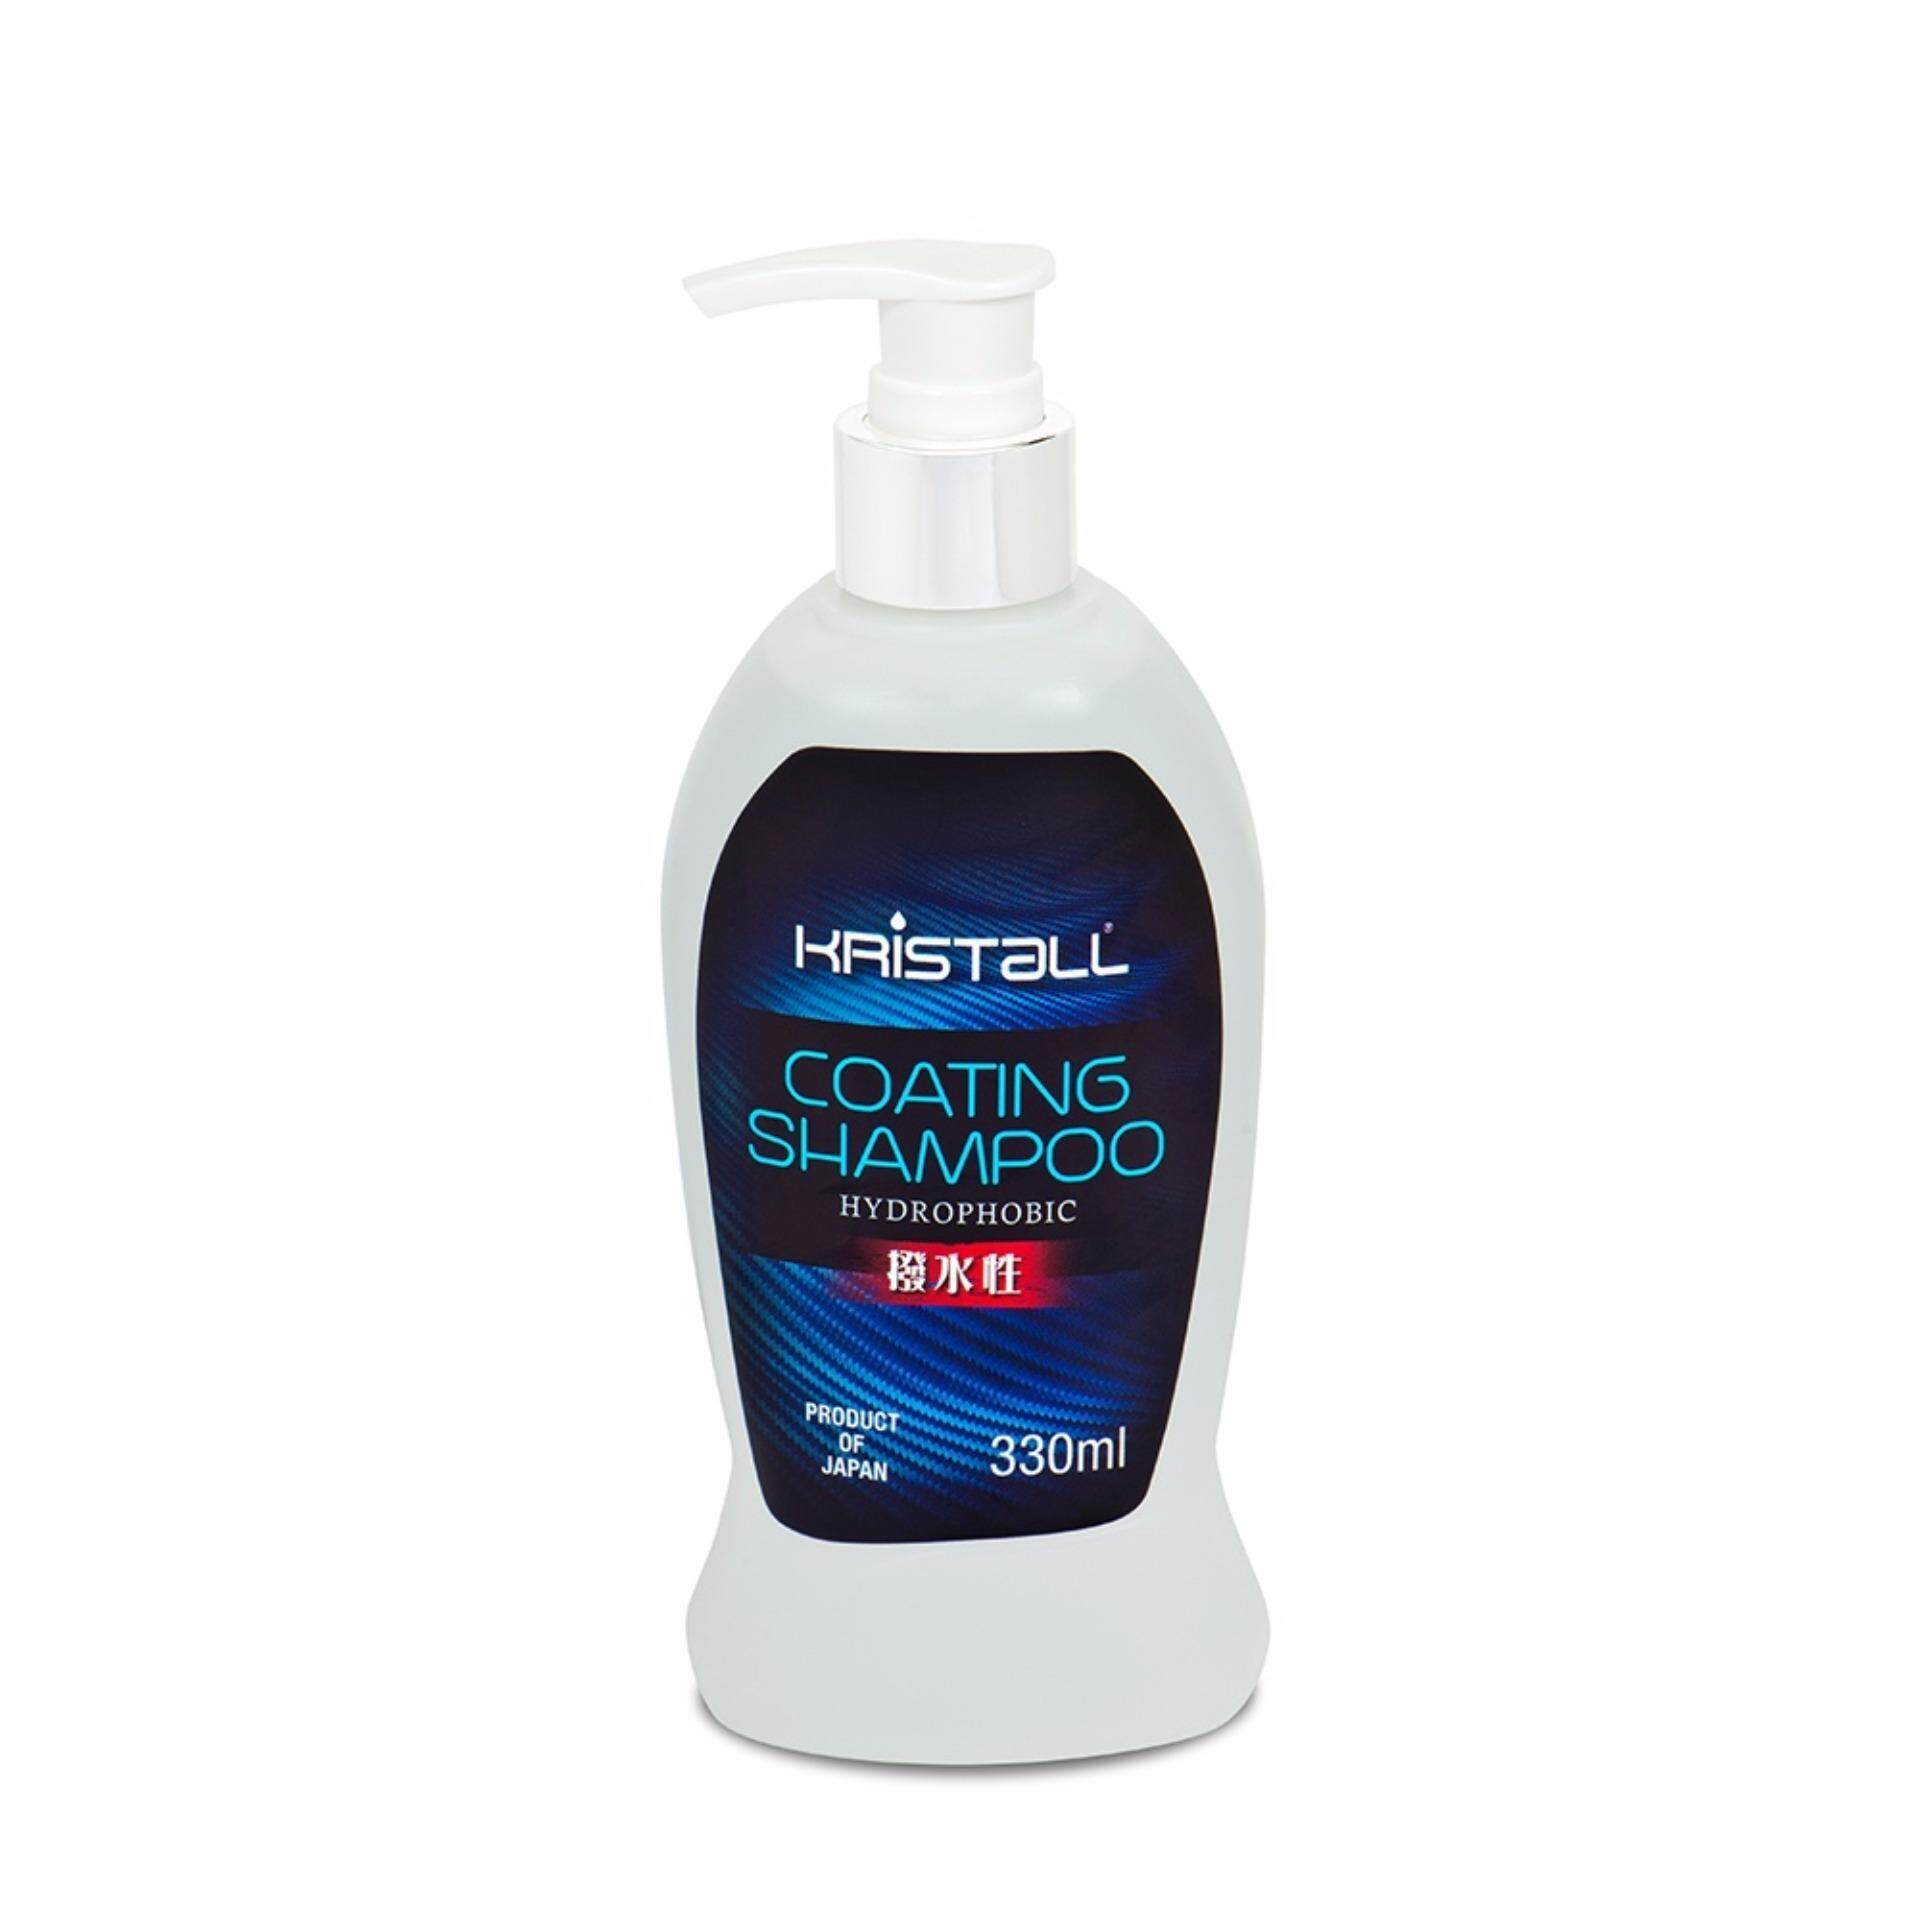 Proton Ertiga MPV Coating Shampoo - Kristall® Car Shampoo WITH Nano Coating (Car Paint Protection, Super Hydrophobic, Deep Gloss, 6.5 pH Balanced Neutral Shampoo)